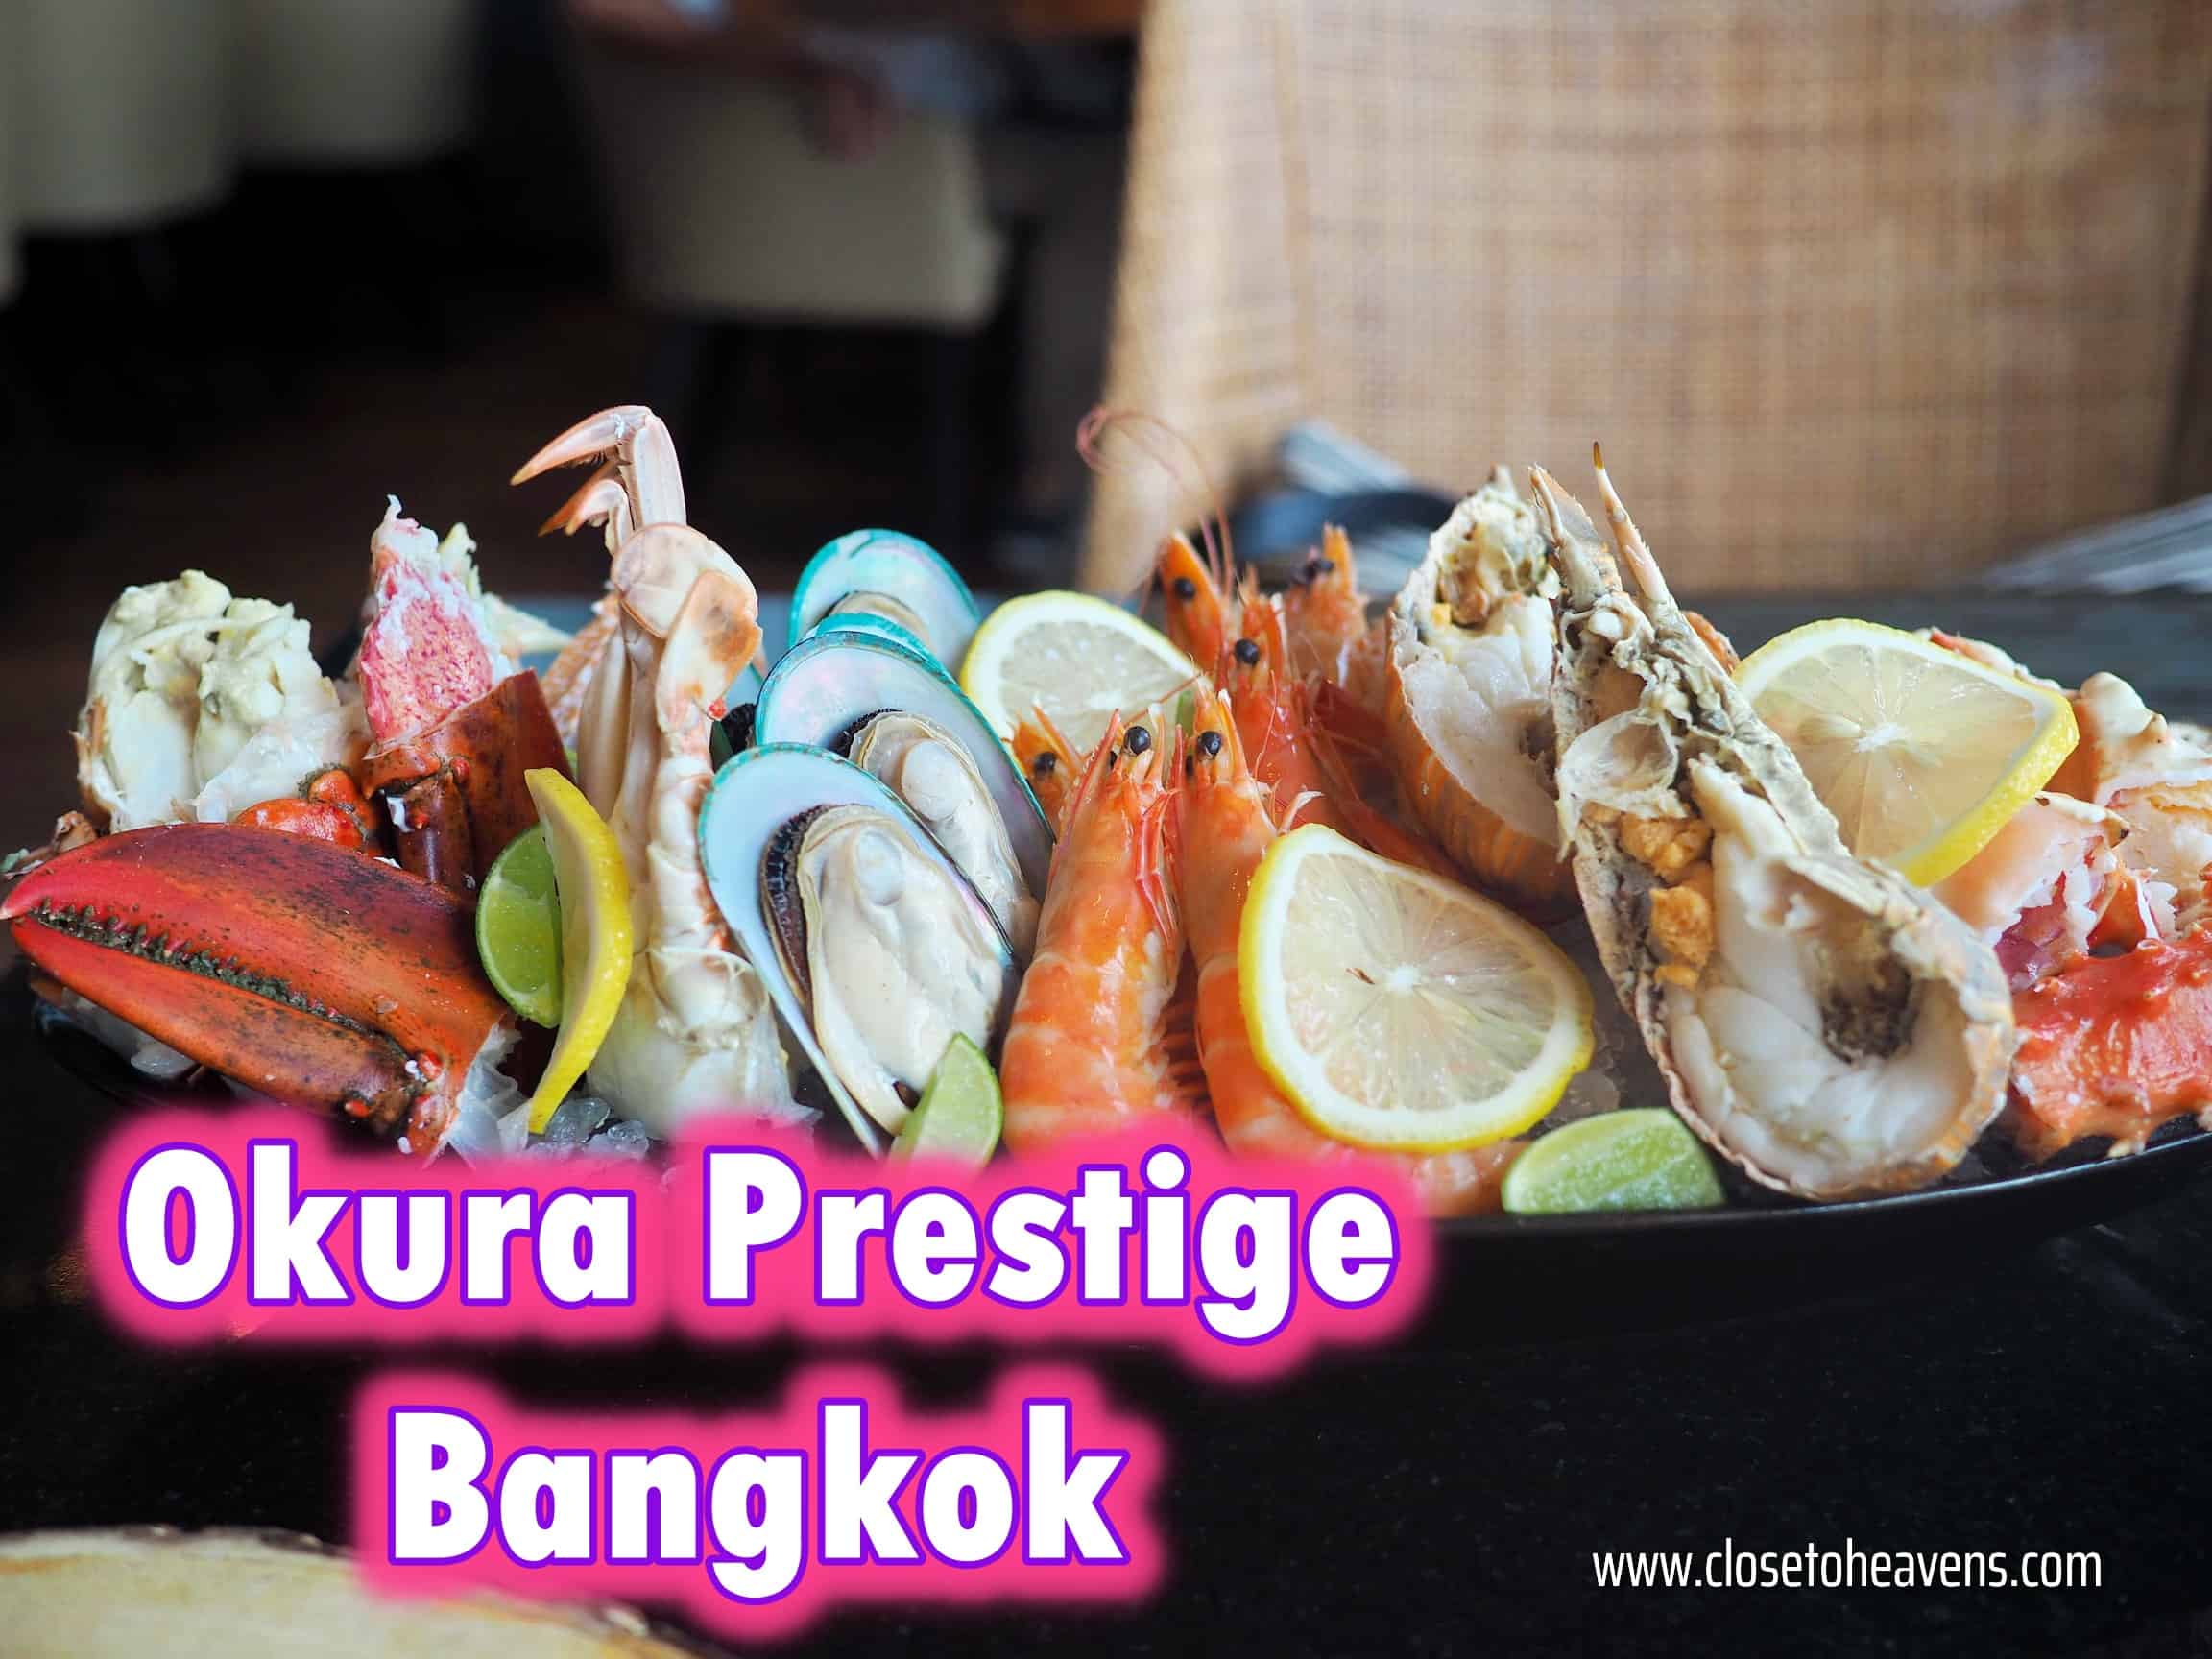 Sunday Brunch Buffet @ The Okura Prestige Bangkok